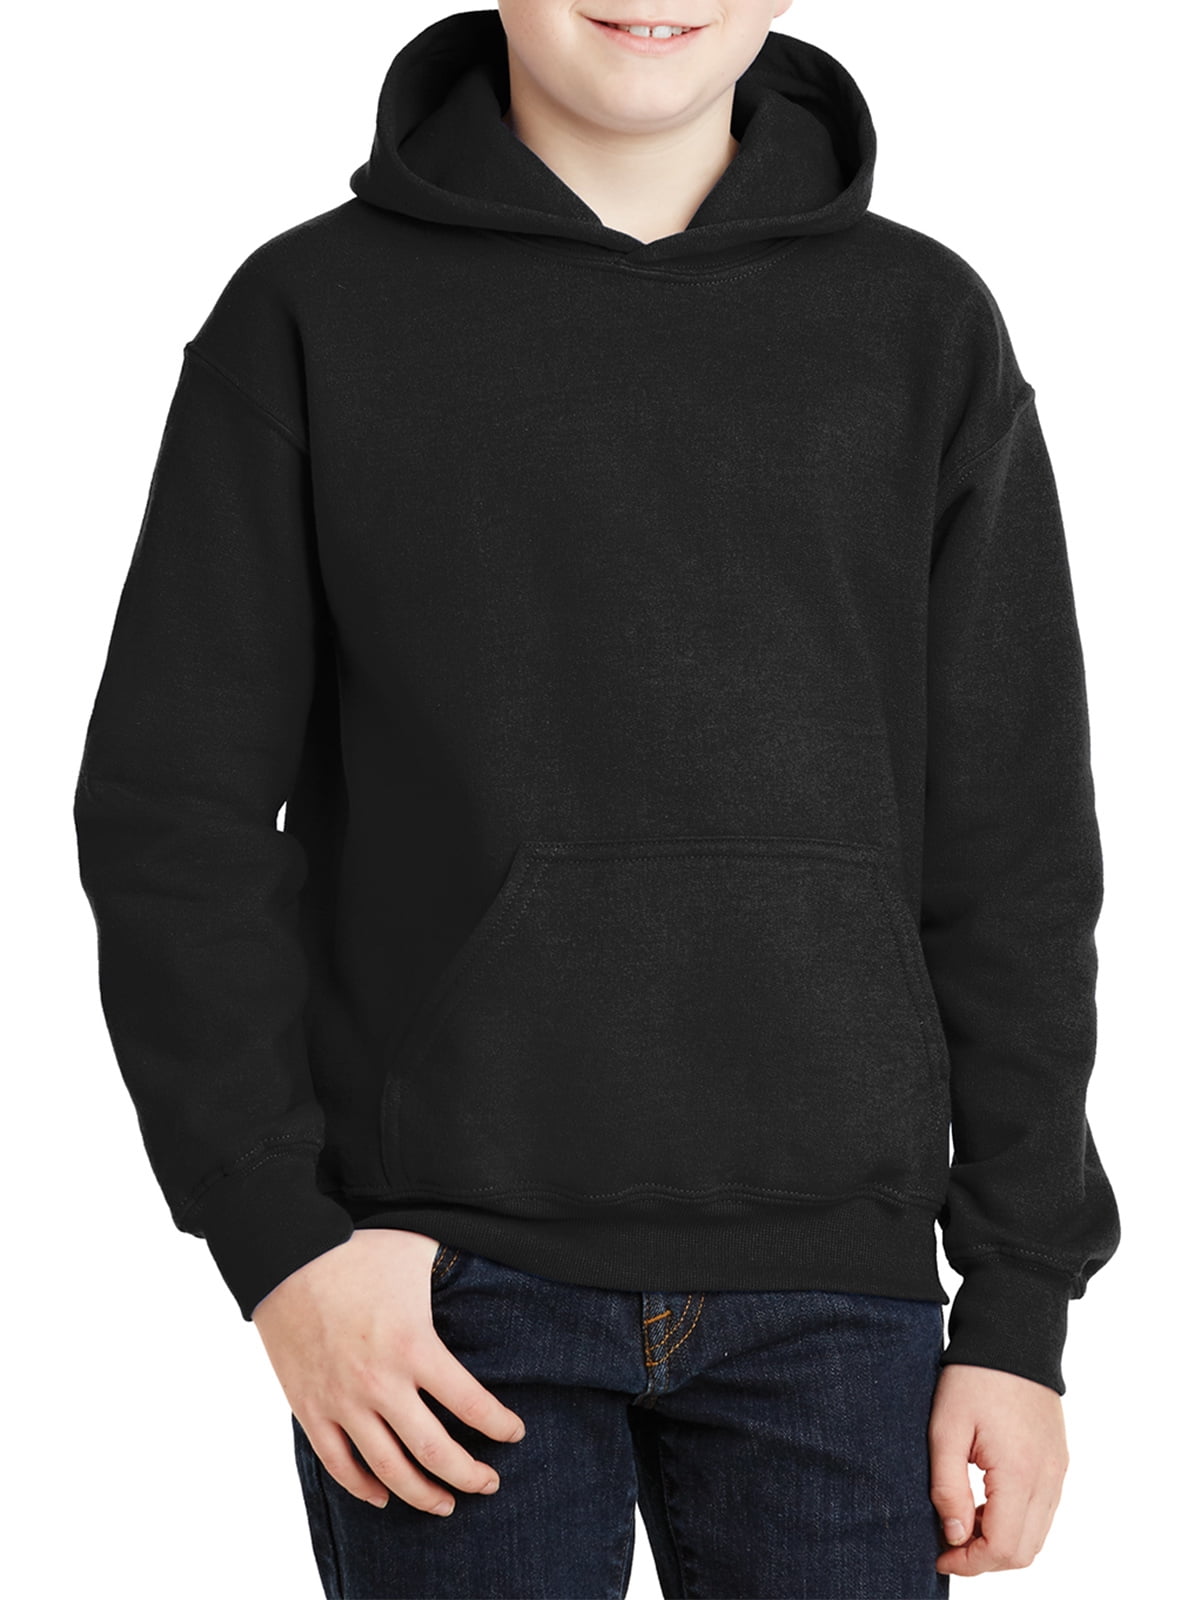 Kids/Youth Zipper Hoodie Long Sleeve 3D Print Sweatshirt Hooded Pocket Pullover For Boys Girls 